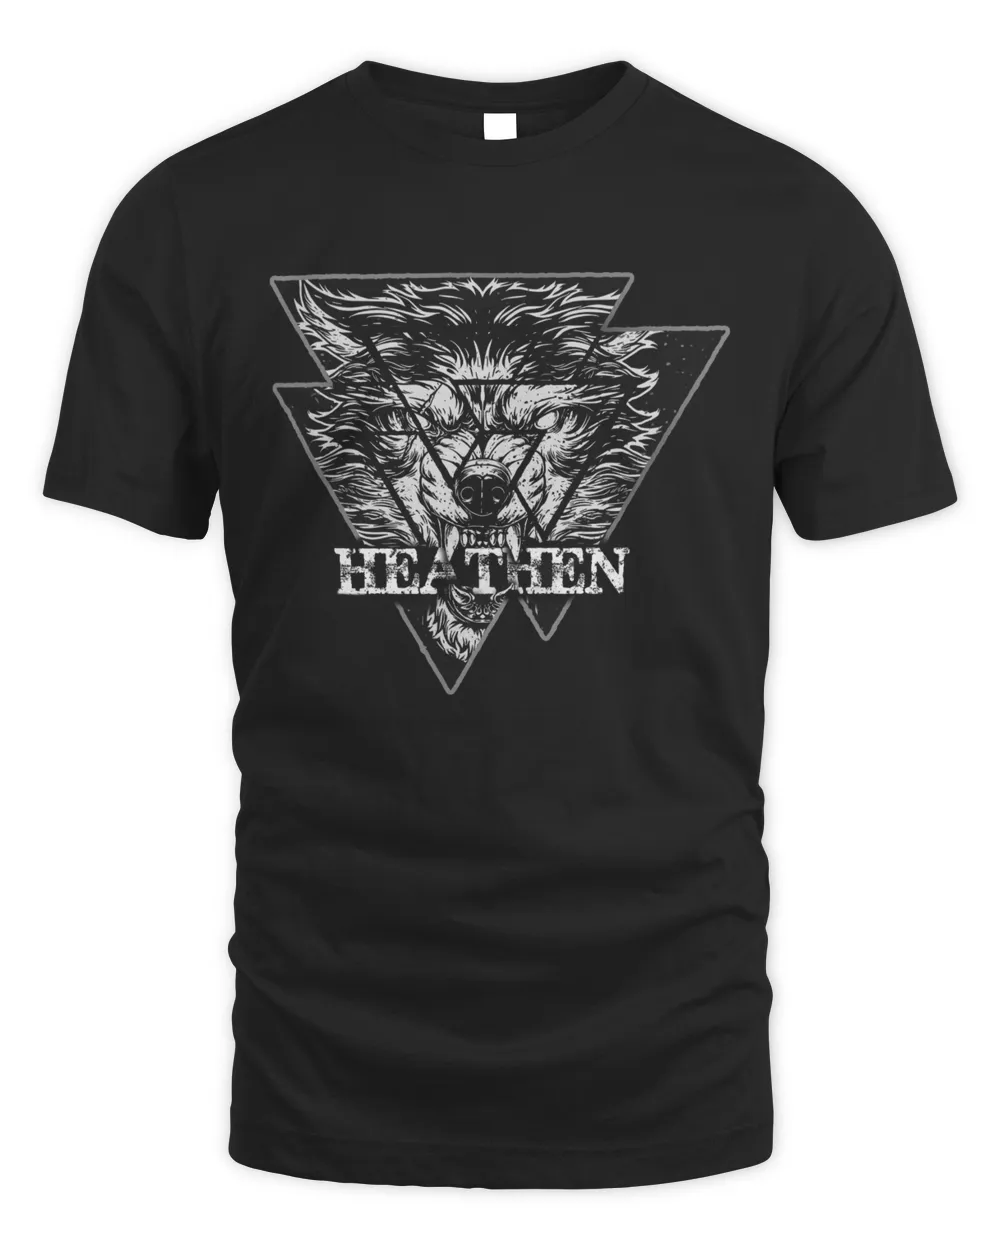 Viking T Shirt For men - Heathen